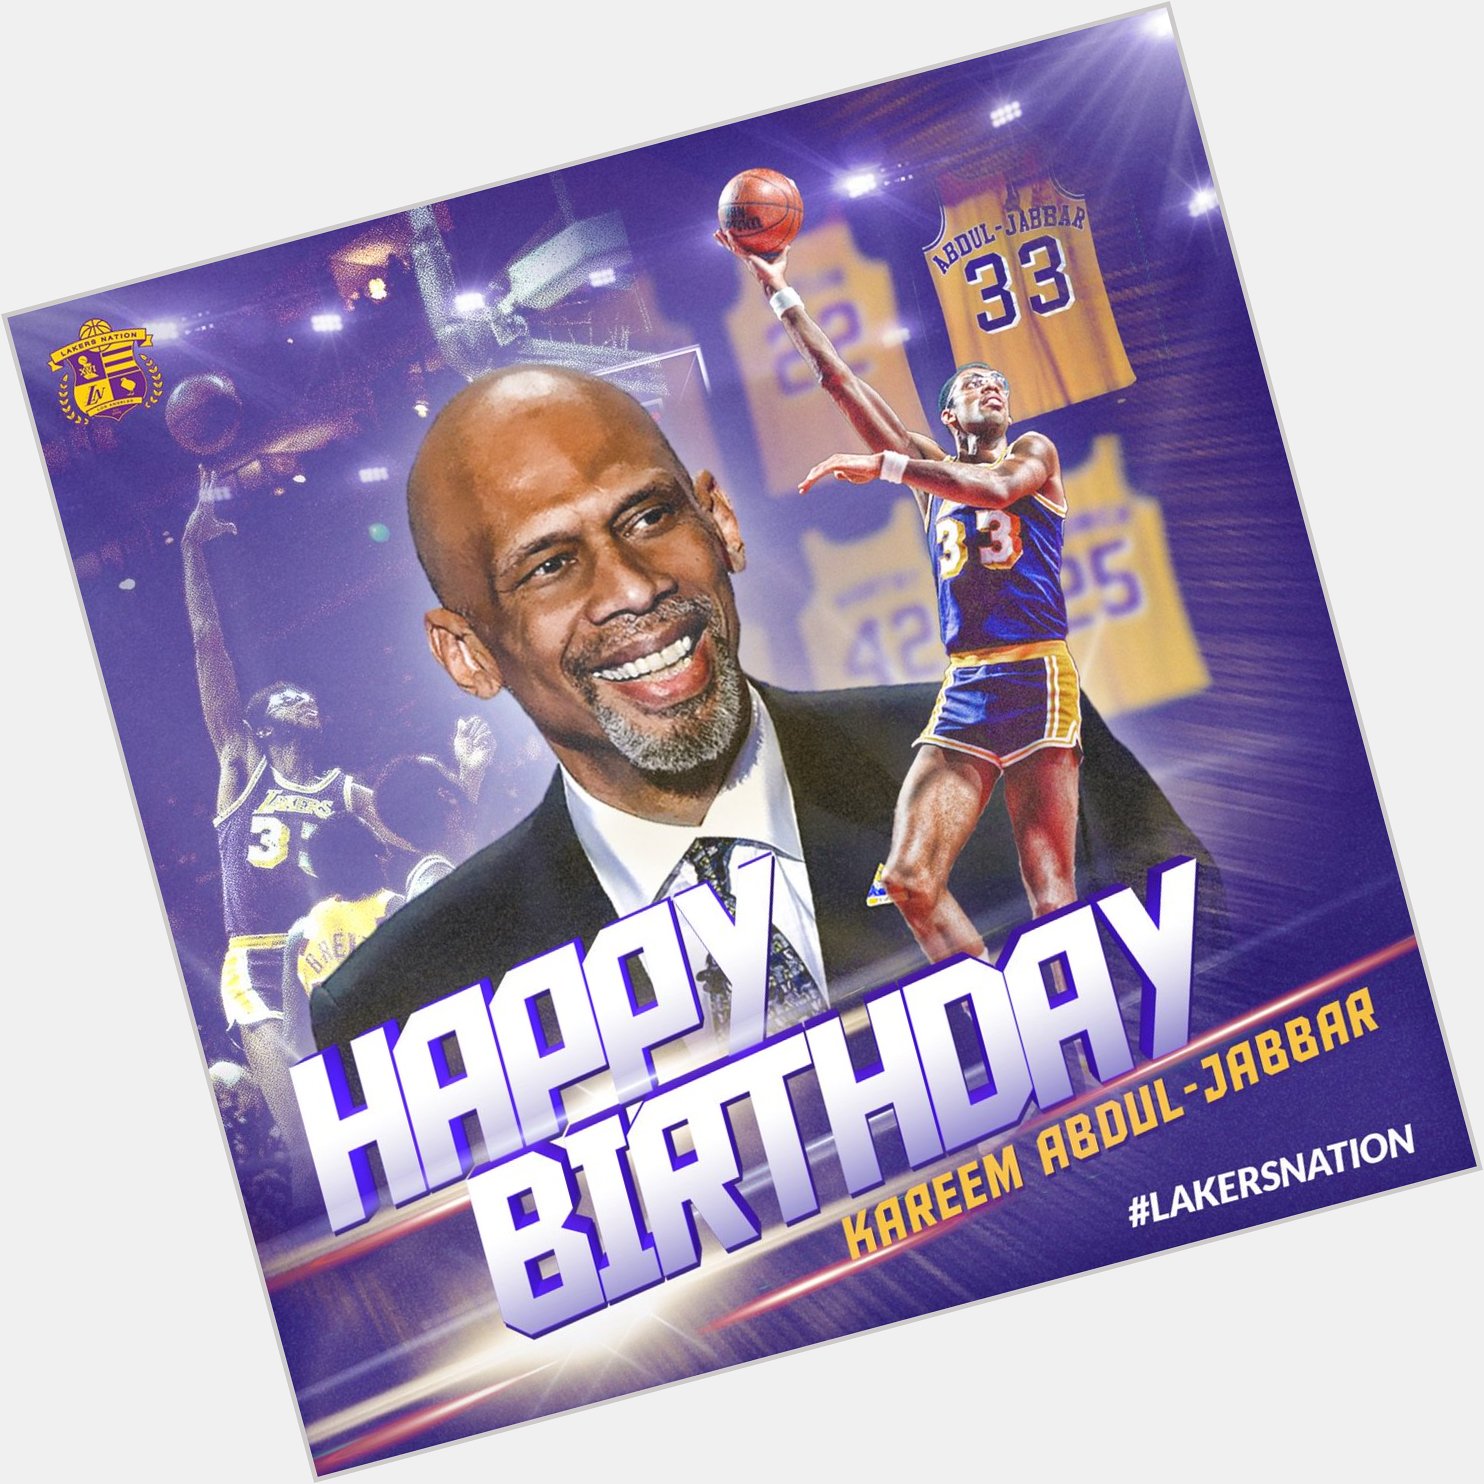 Join us in wishing Lakers legend Kareem Abdul-Jabbar ( a Happy 70th Birthday! 